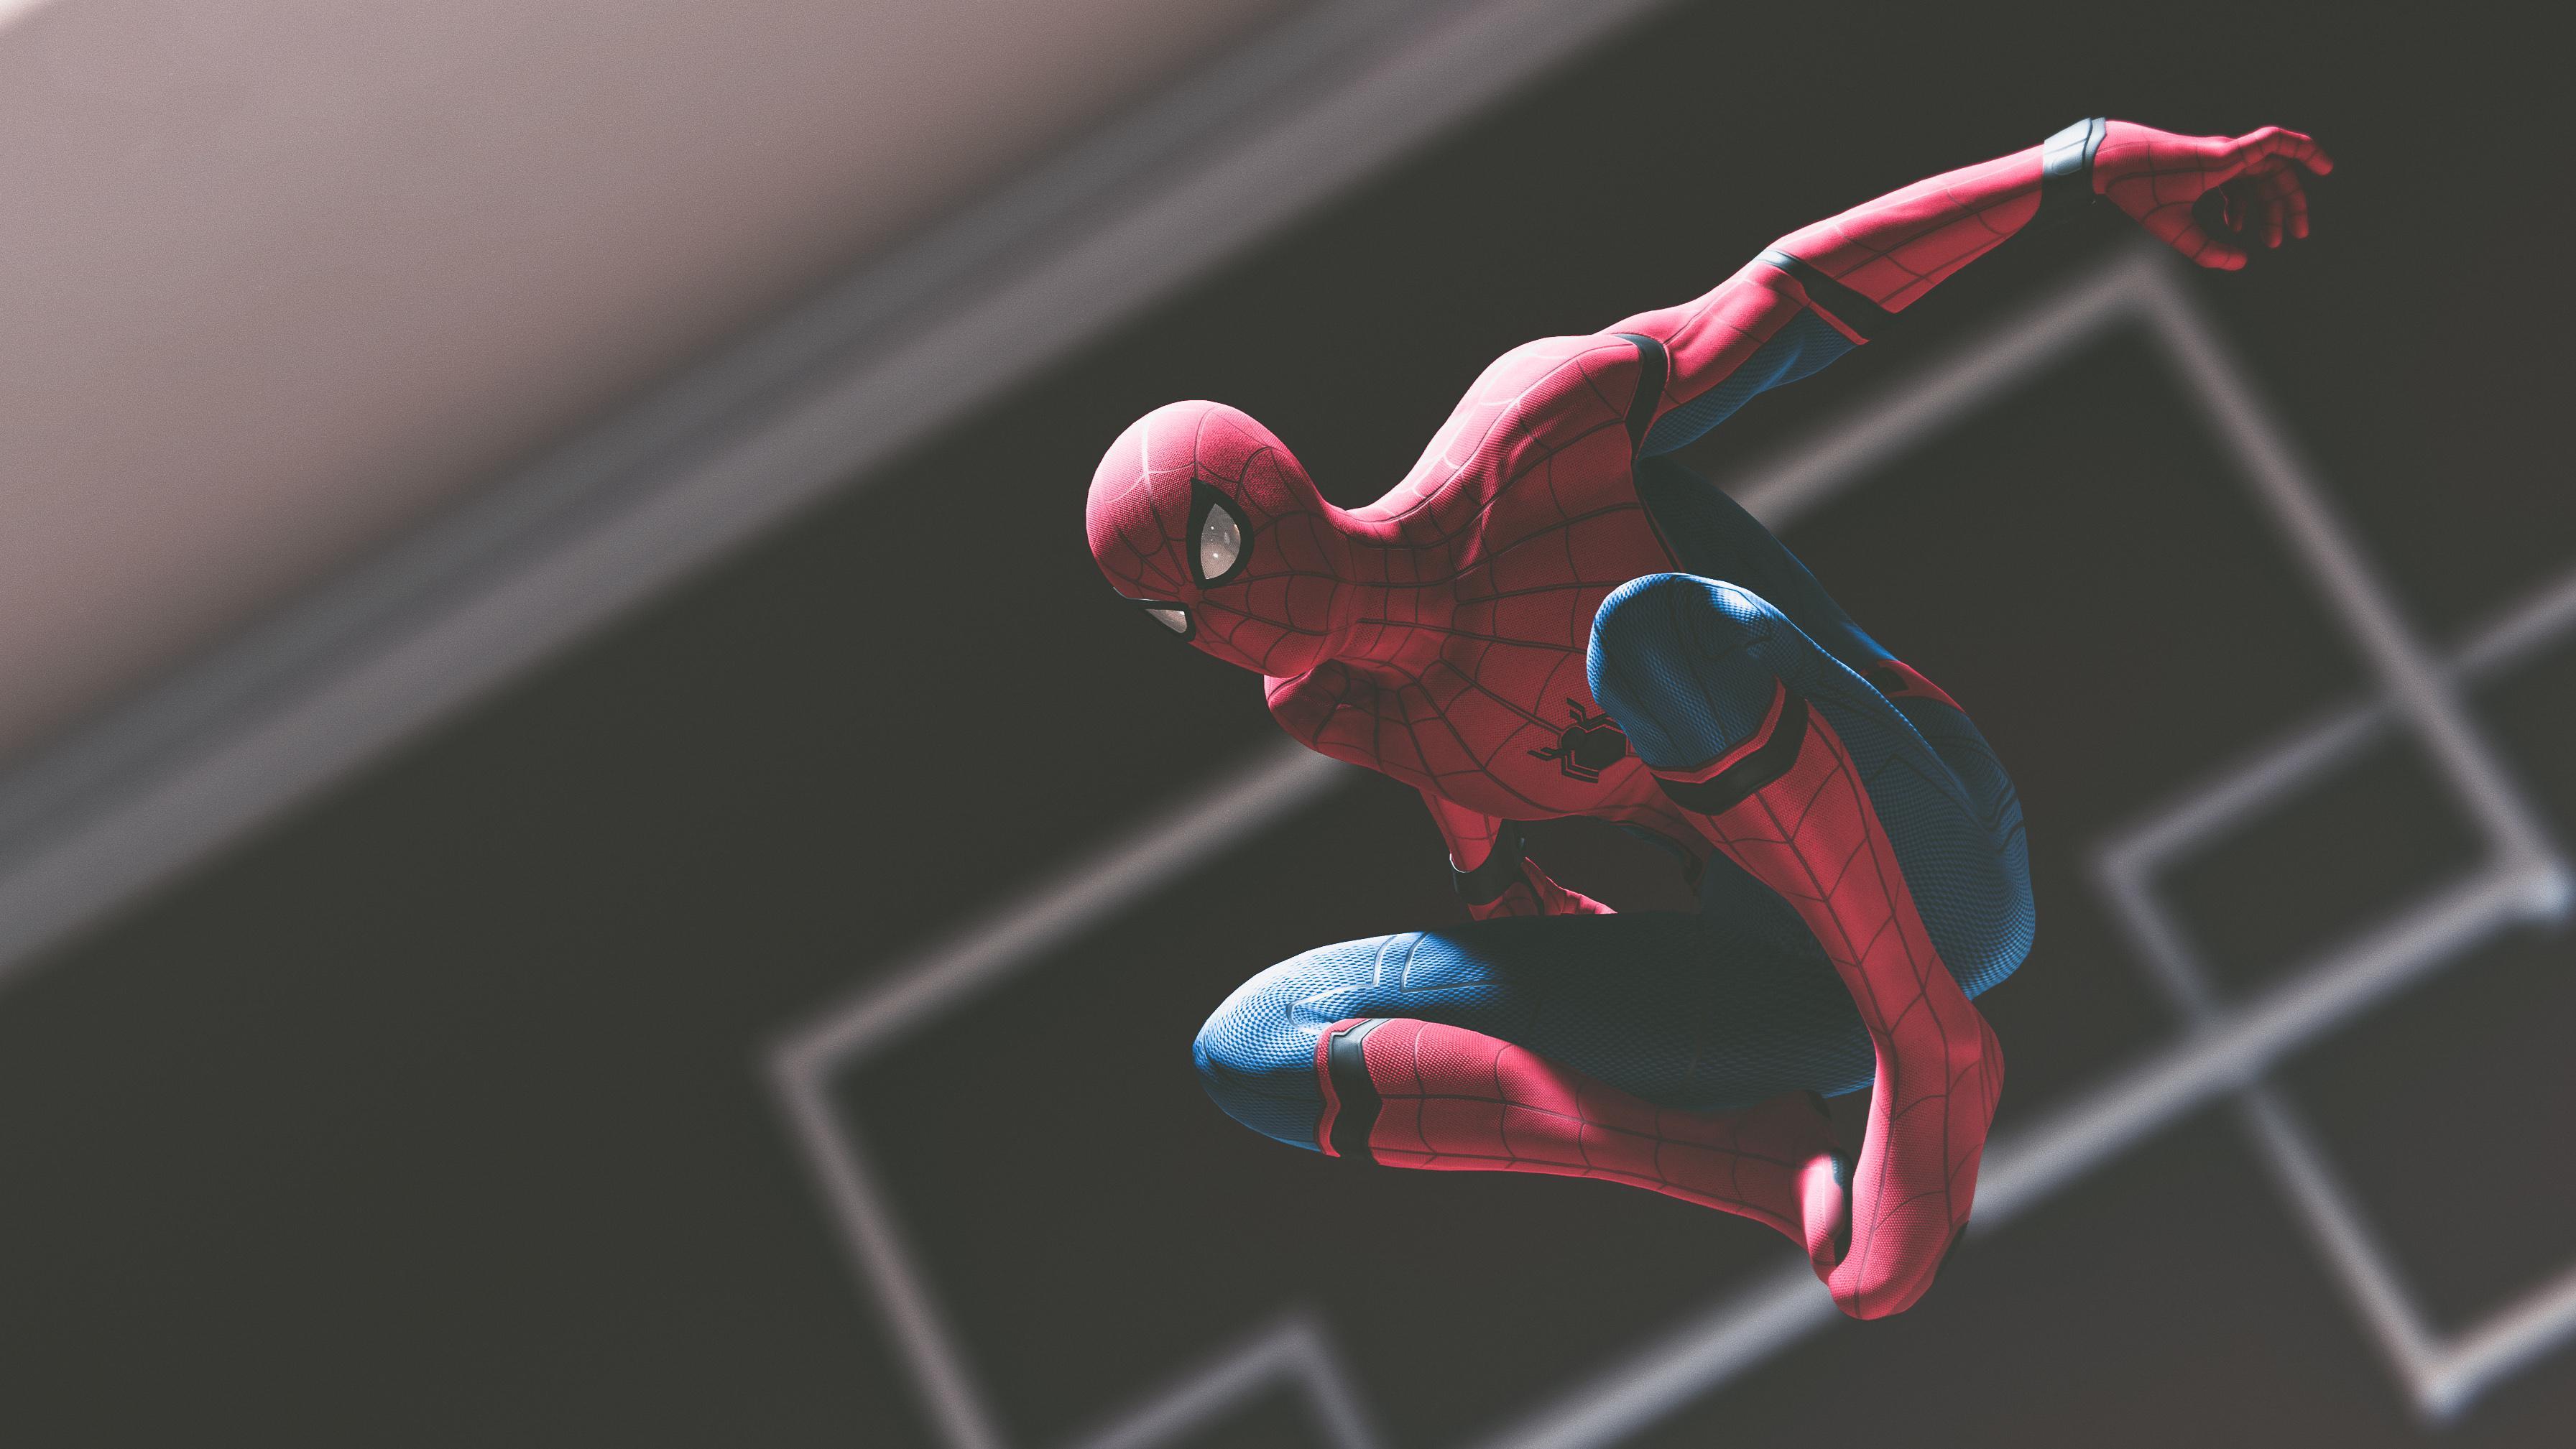 Spiderman 4K wallpaper for your desktop or mobile screen free